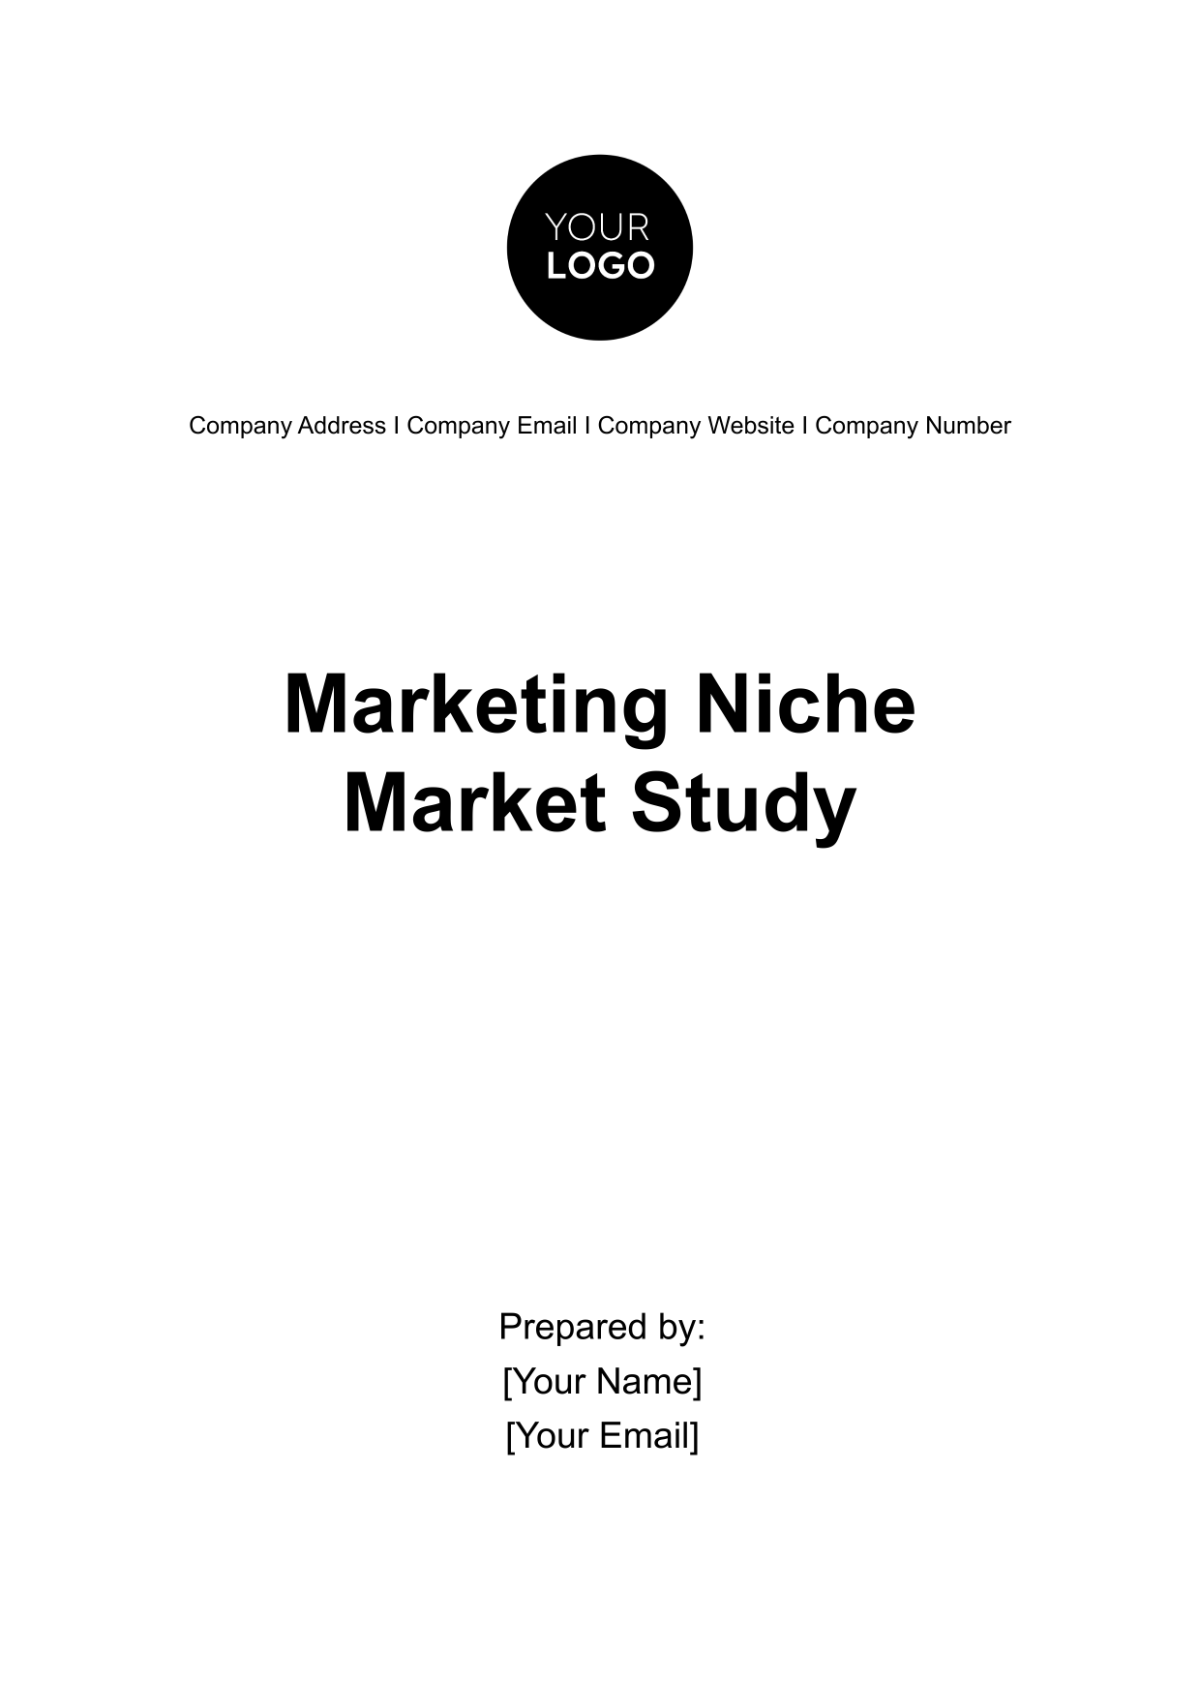 Marketing Niche Market Study Template